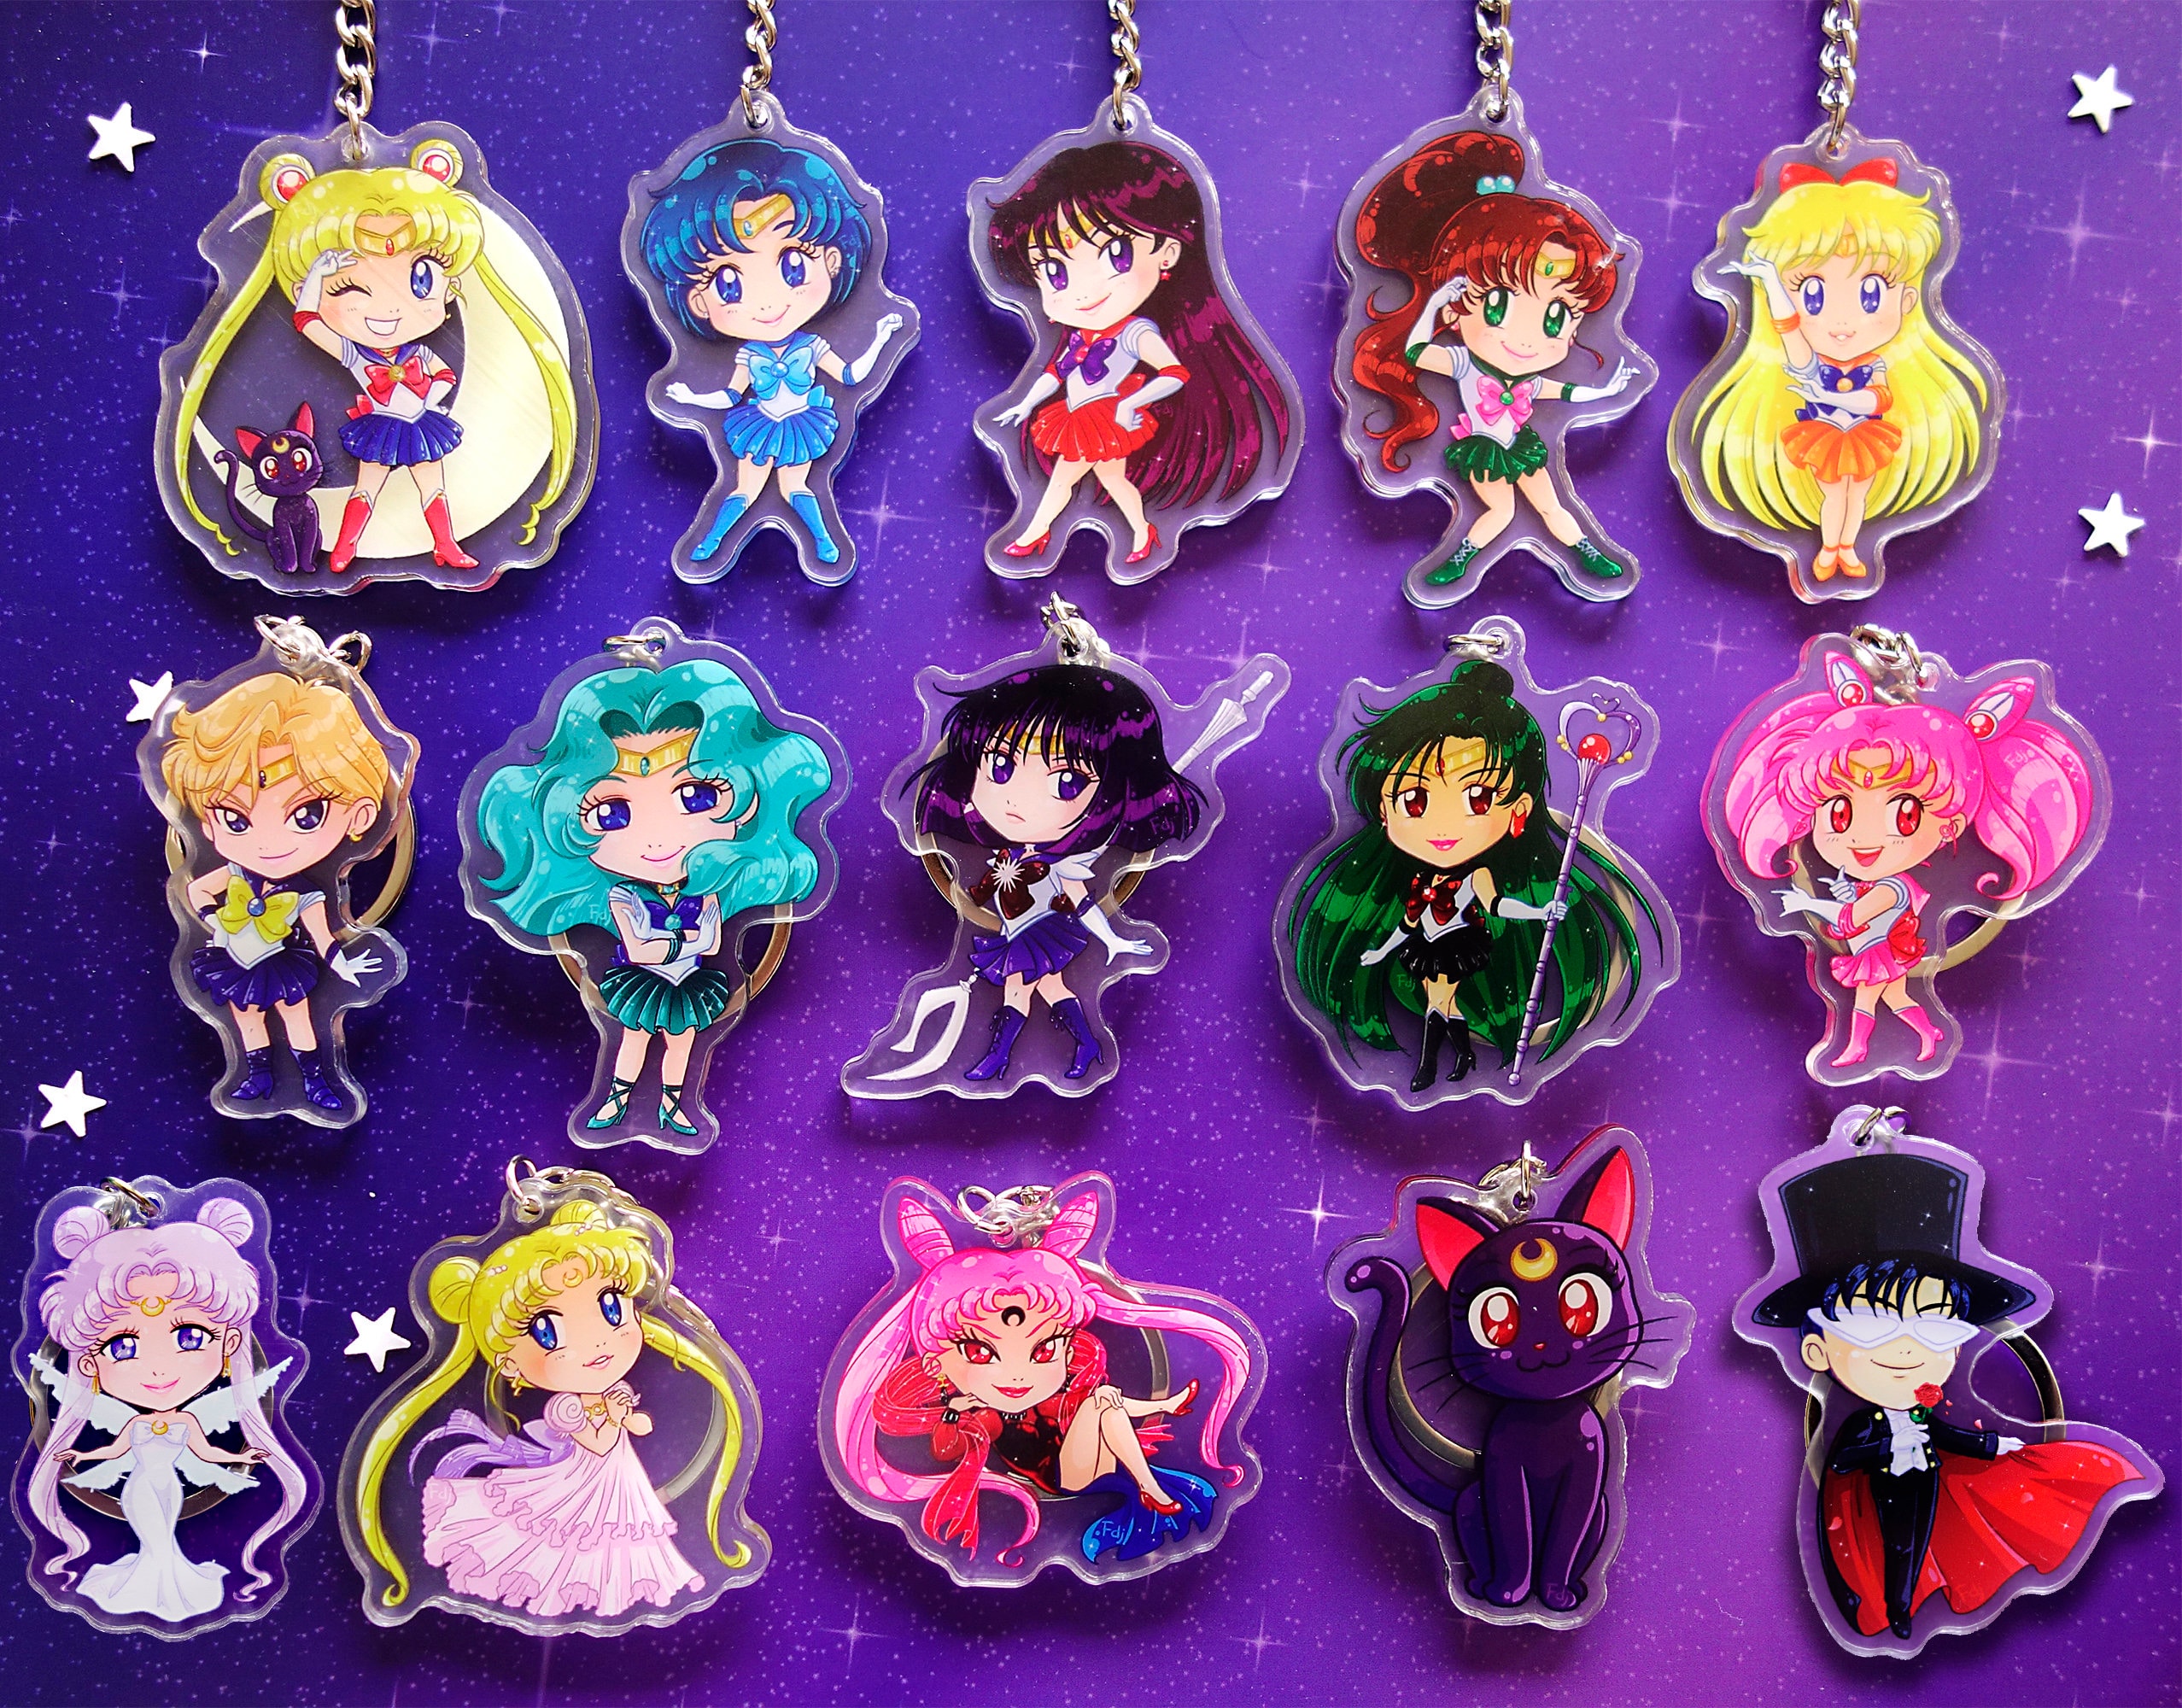 SAILOR MOON Keychain Sailor Moon